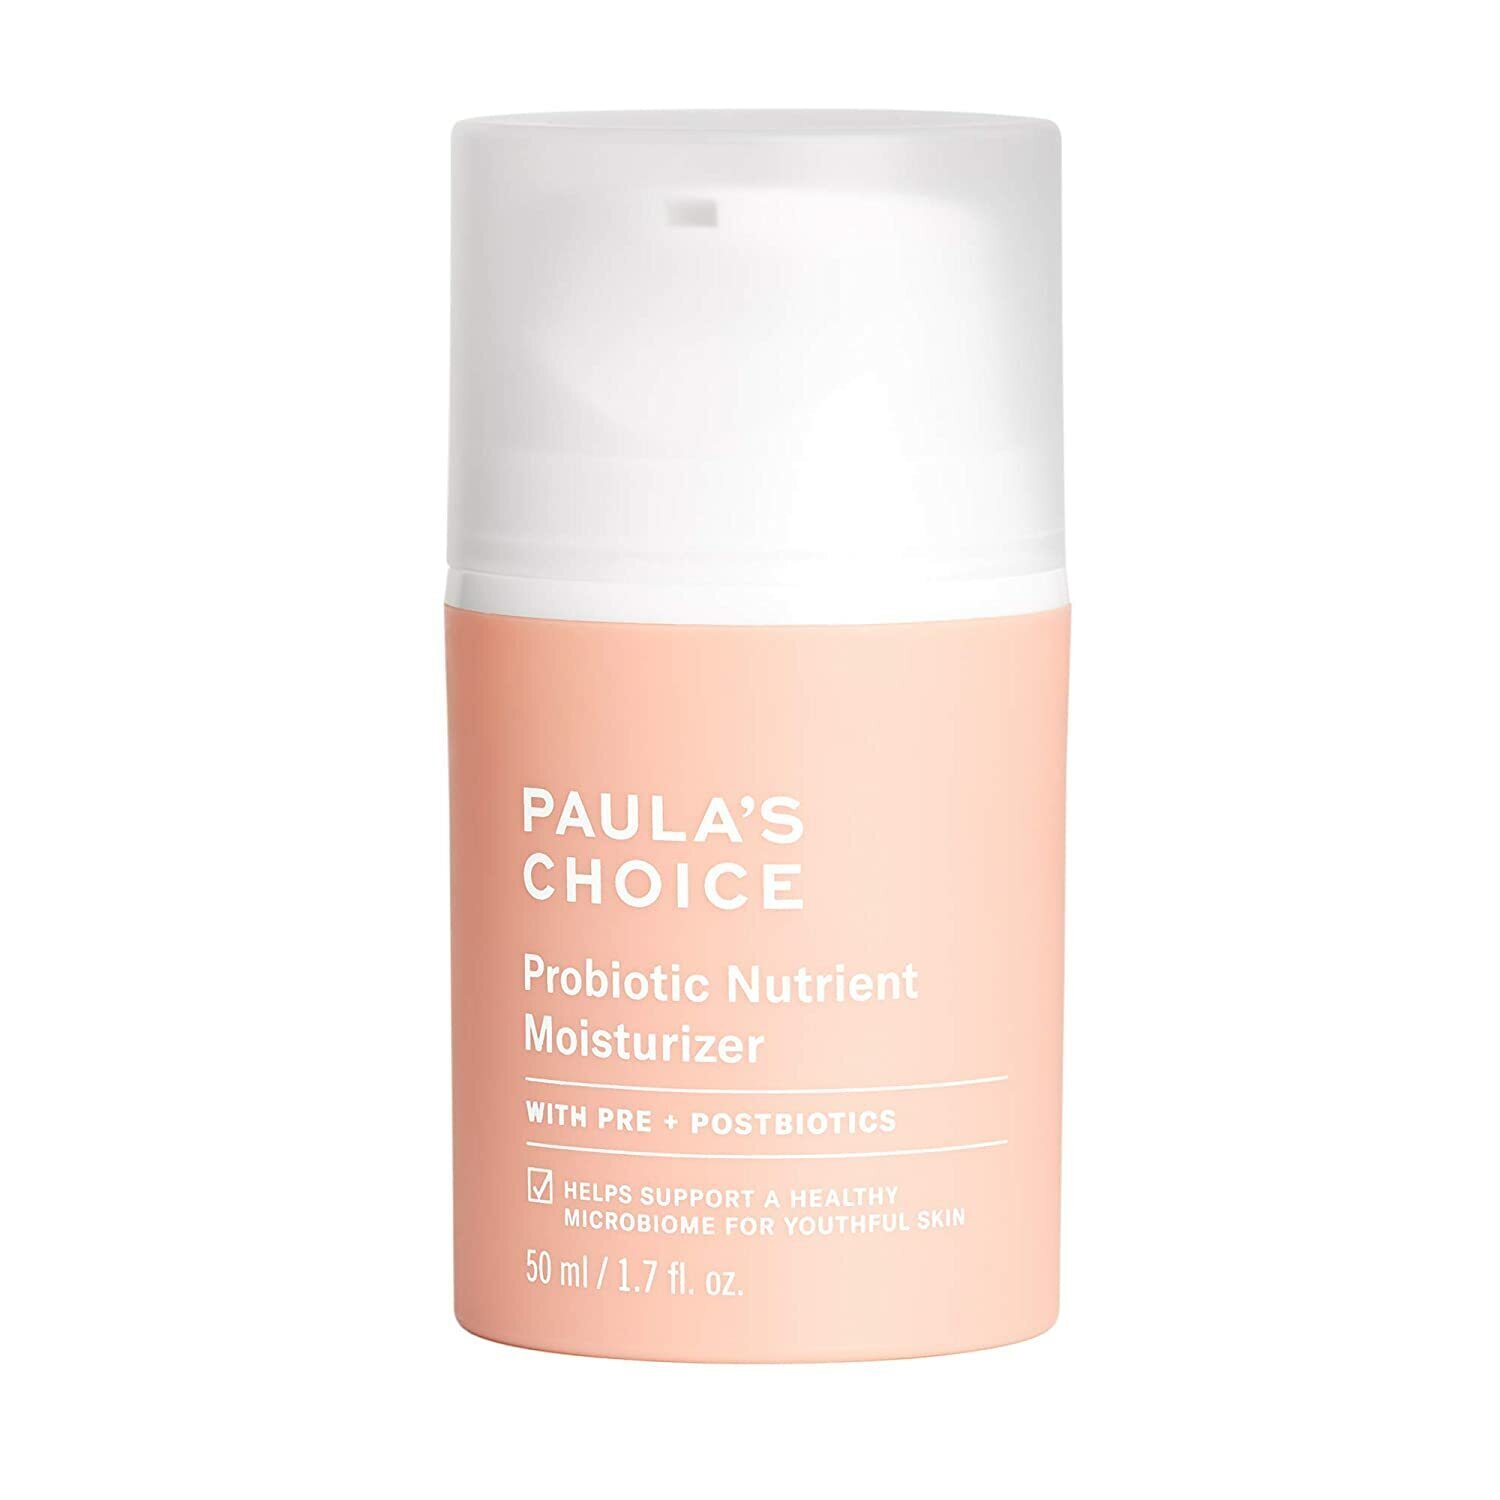 Paula's Choice Probiotic Nutrient Moisturizer 50 ml